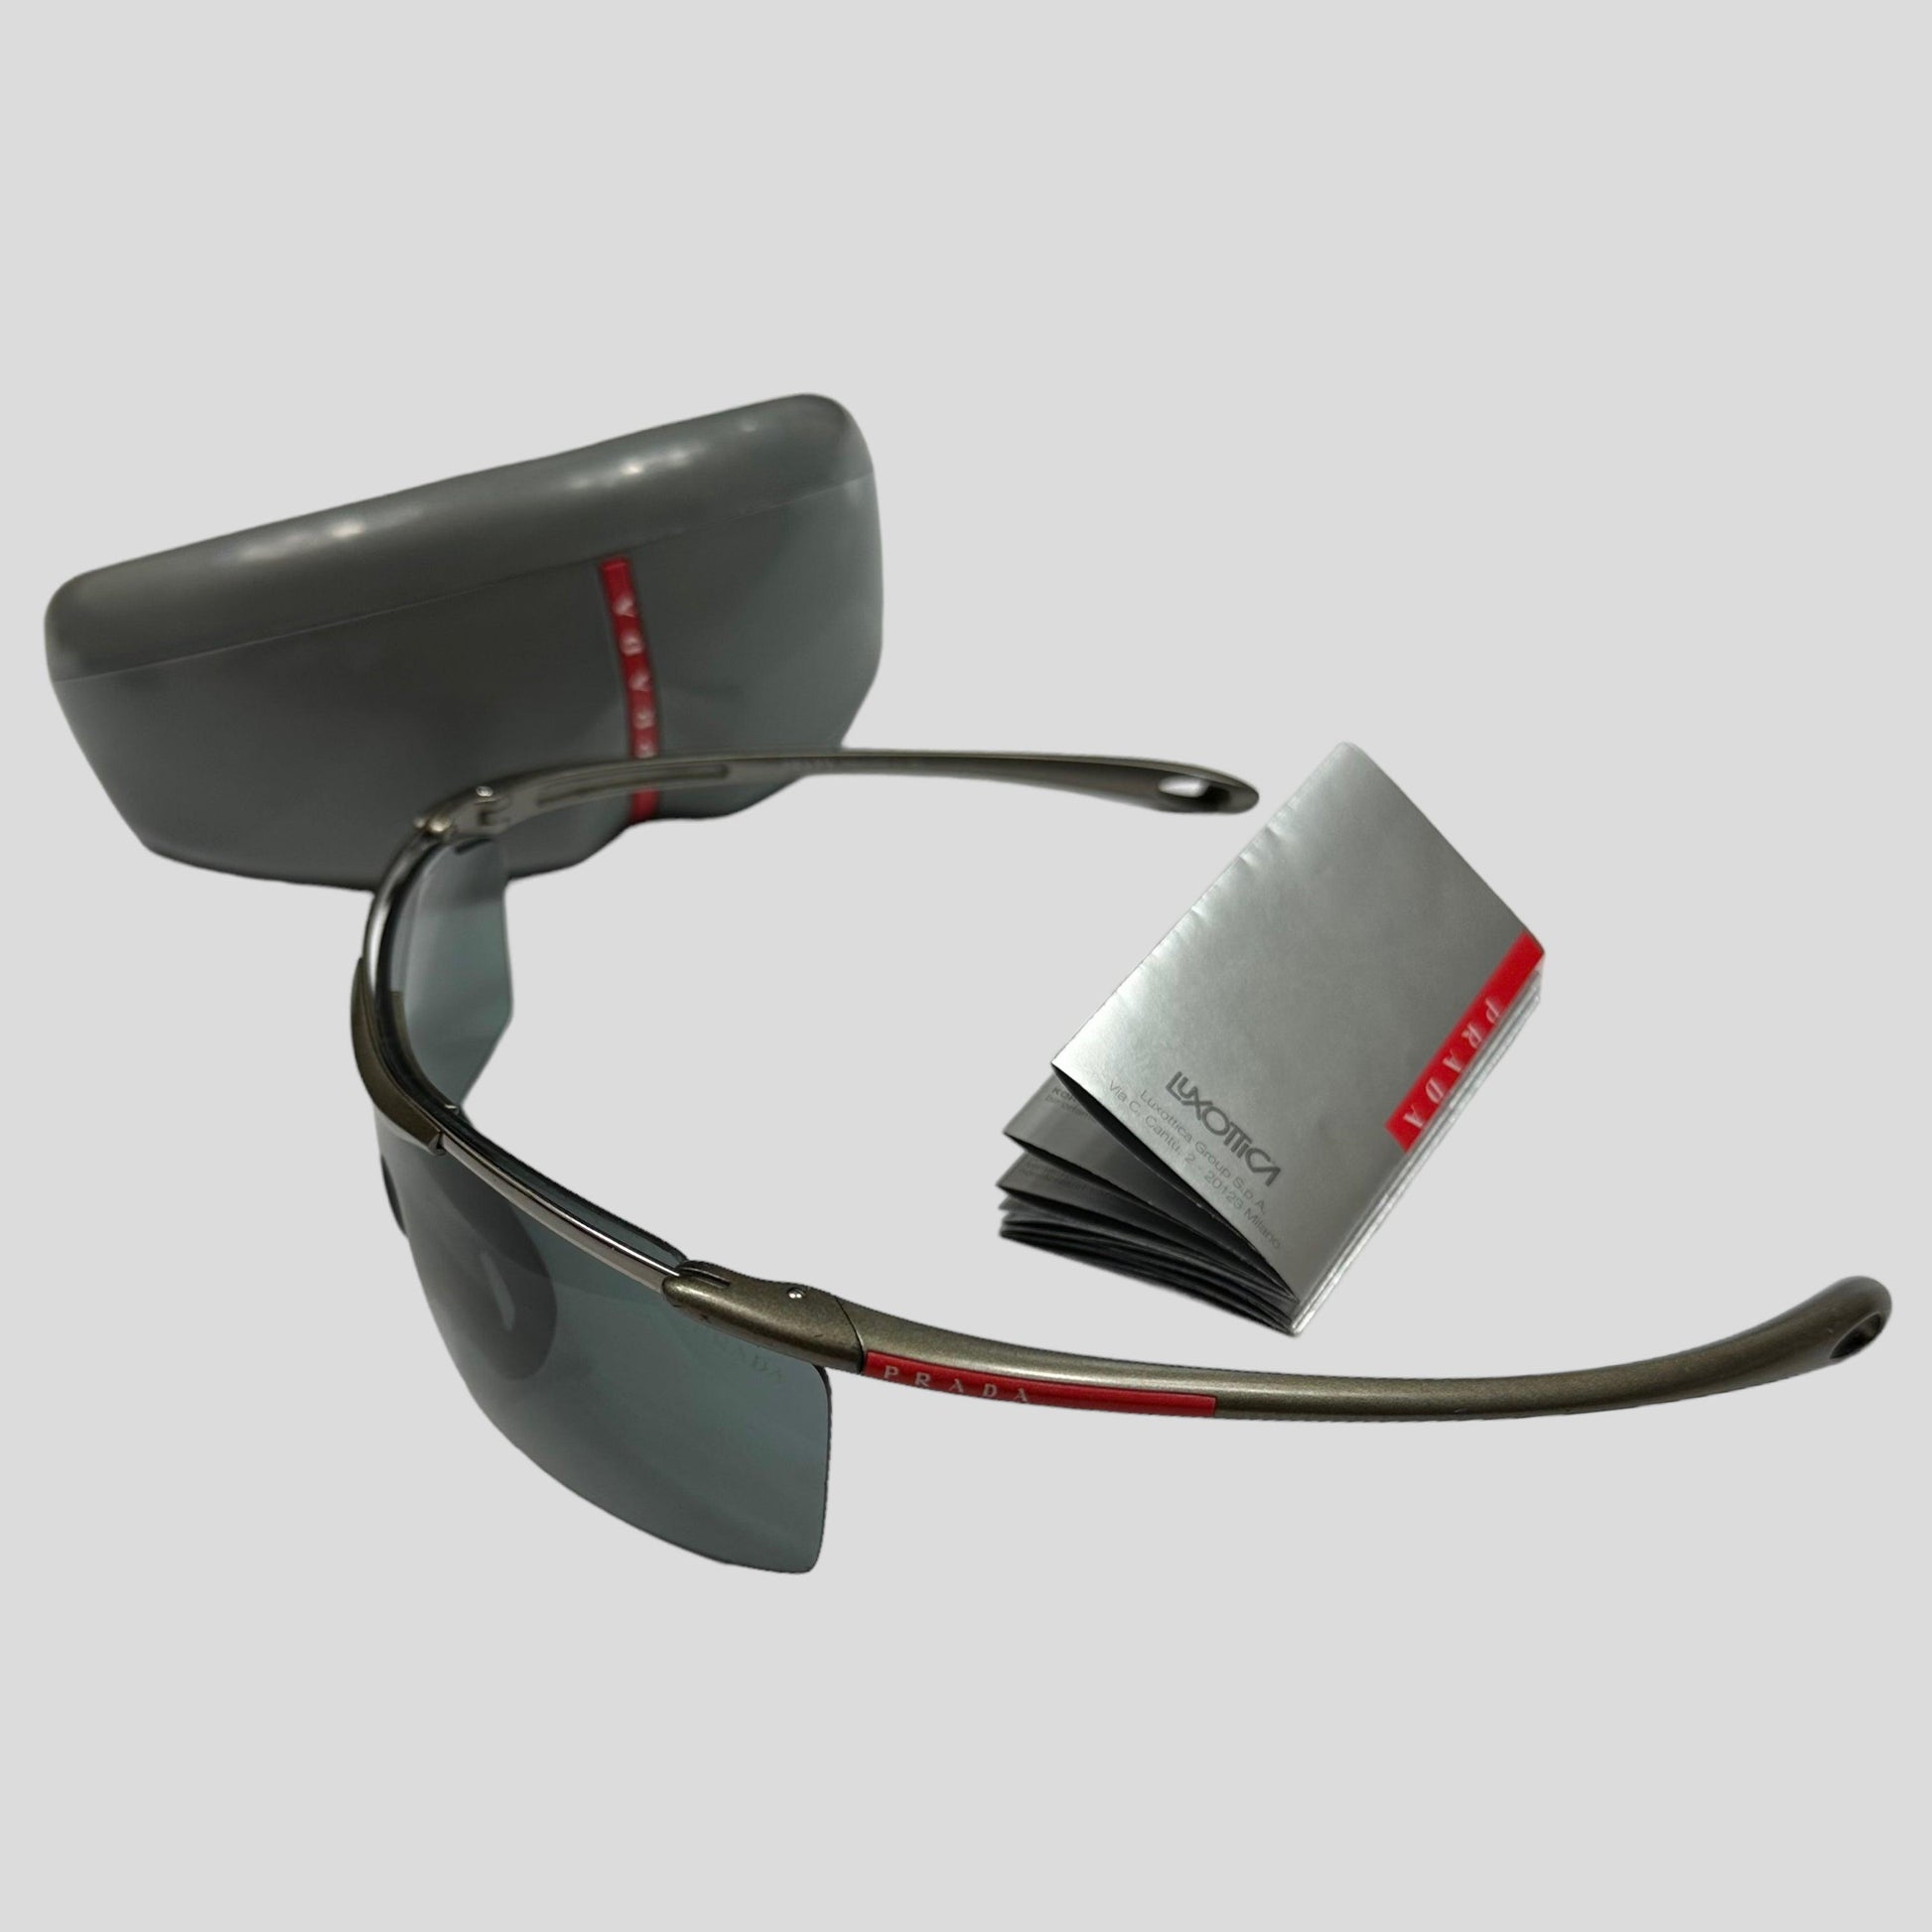 Prada Sport X-frame Sunglasses - Known Source